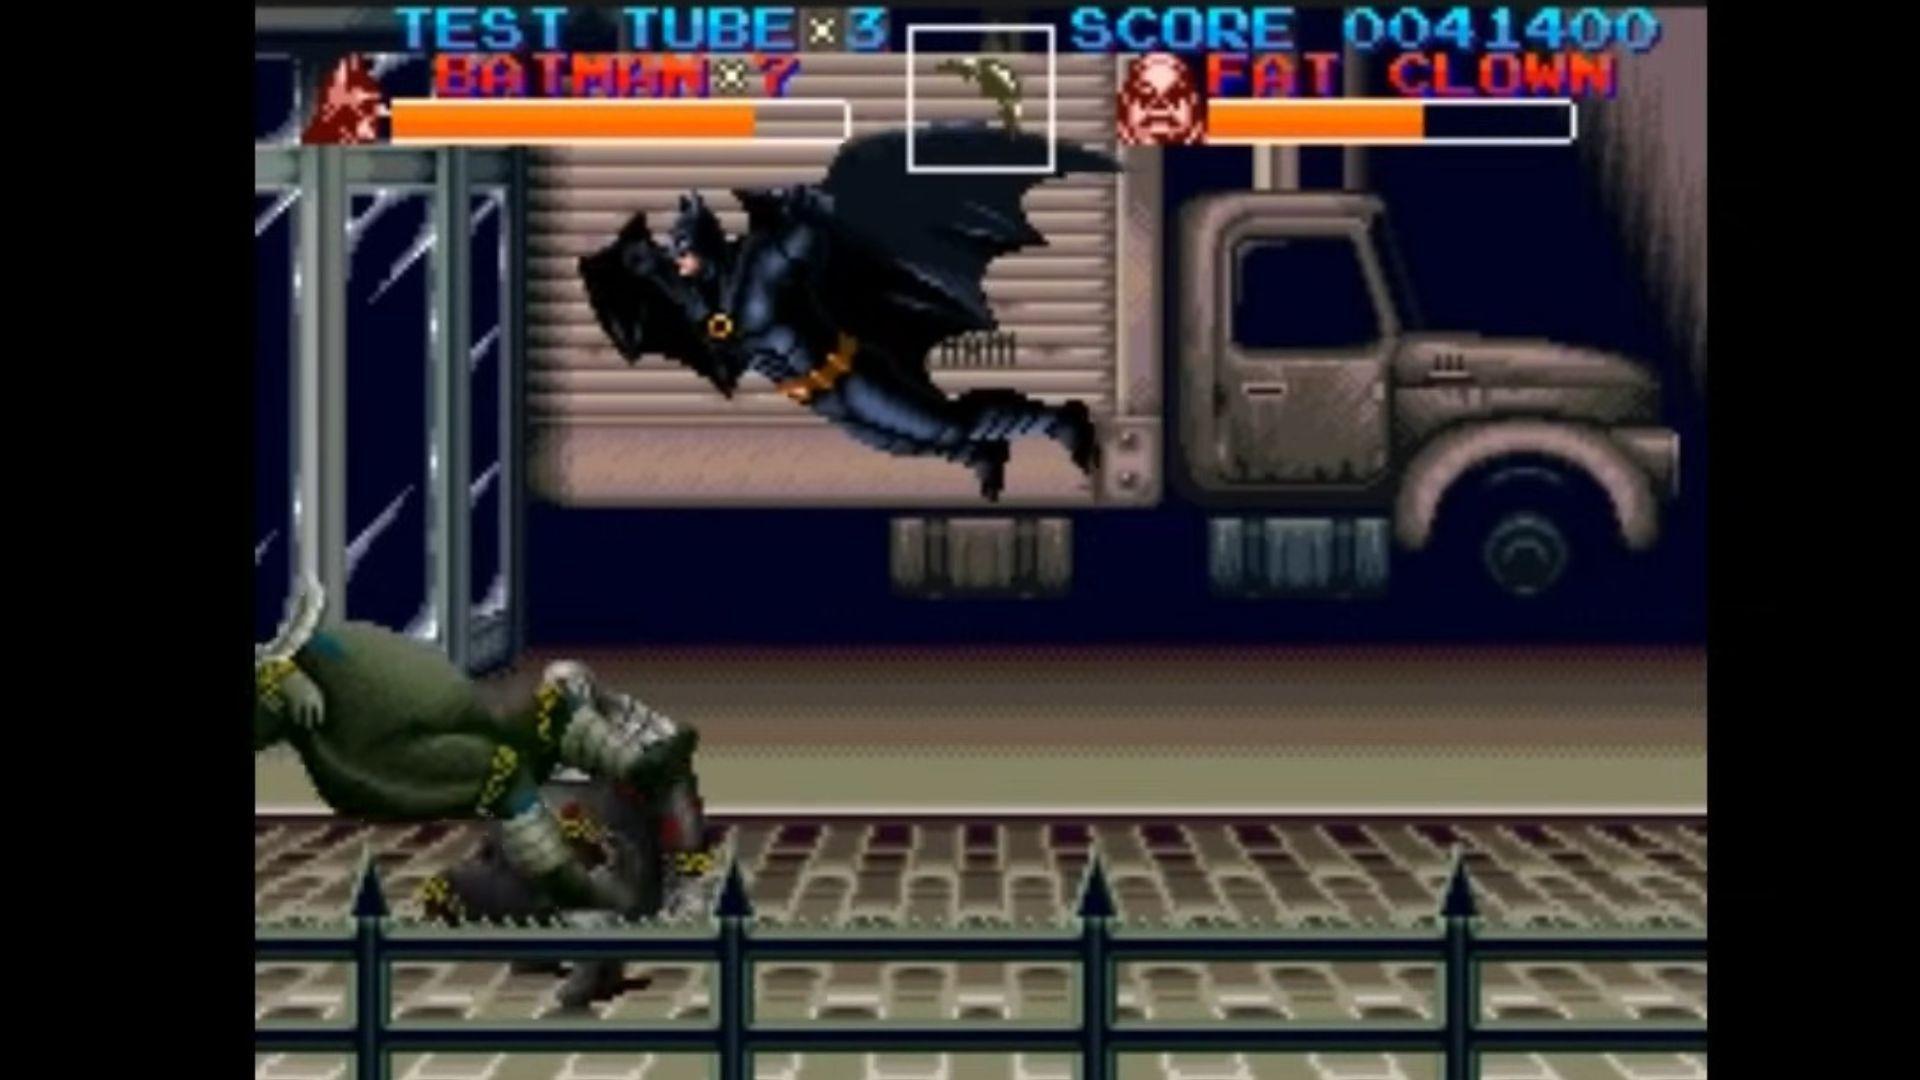 Batman Returns is one of the last good games of the 2D era.